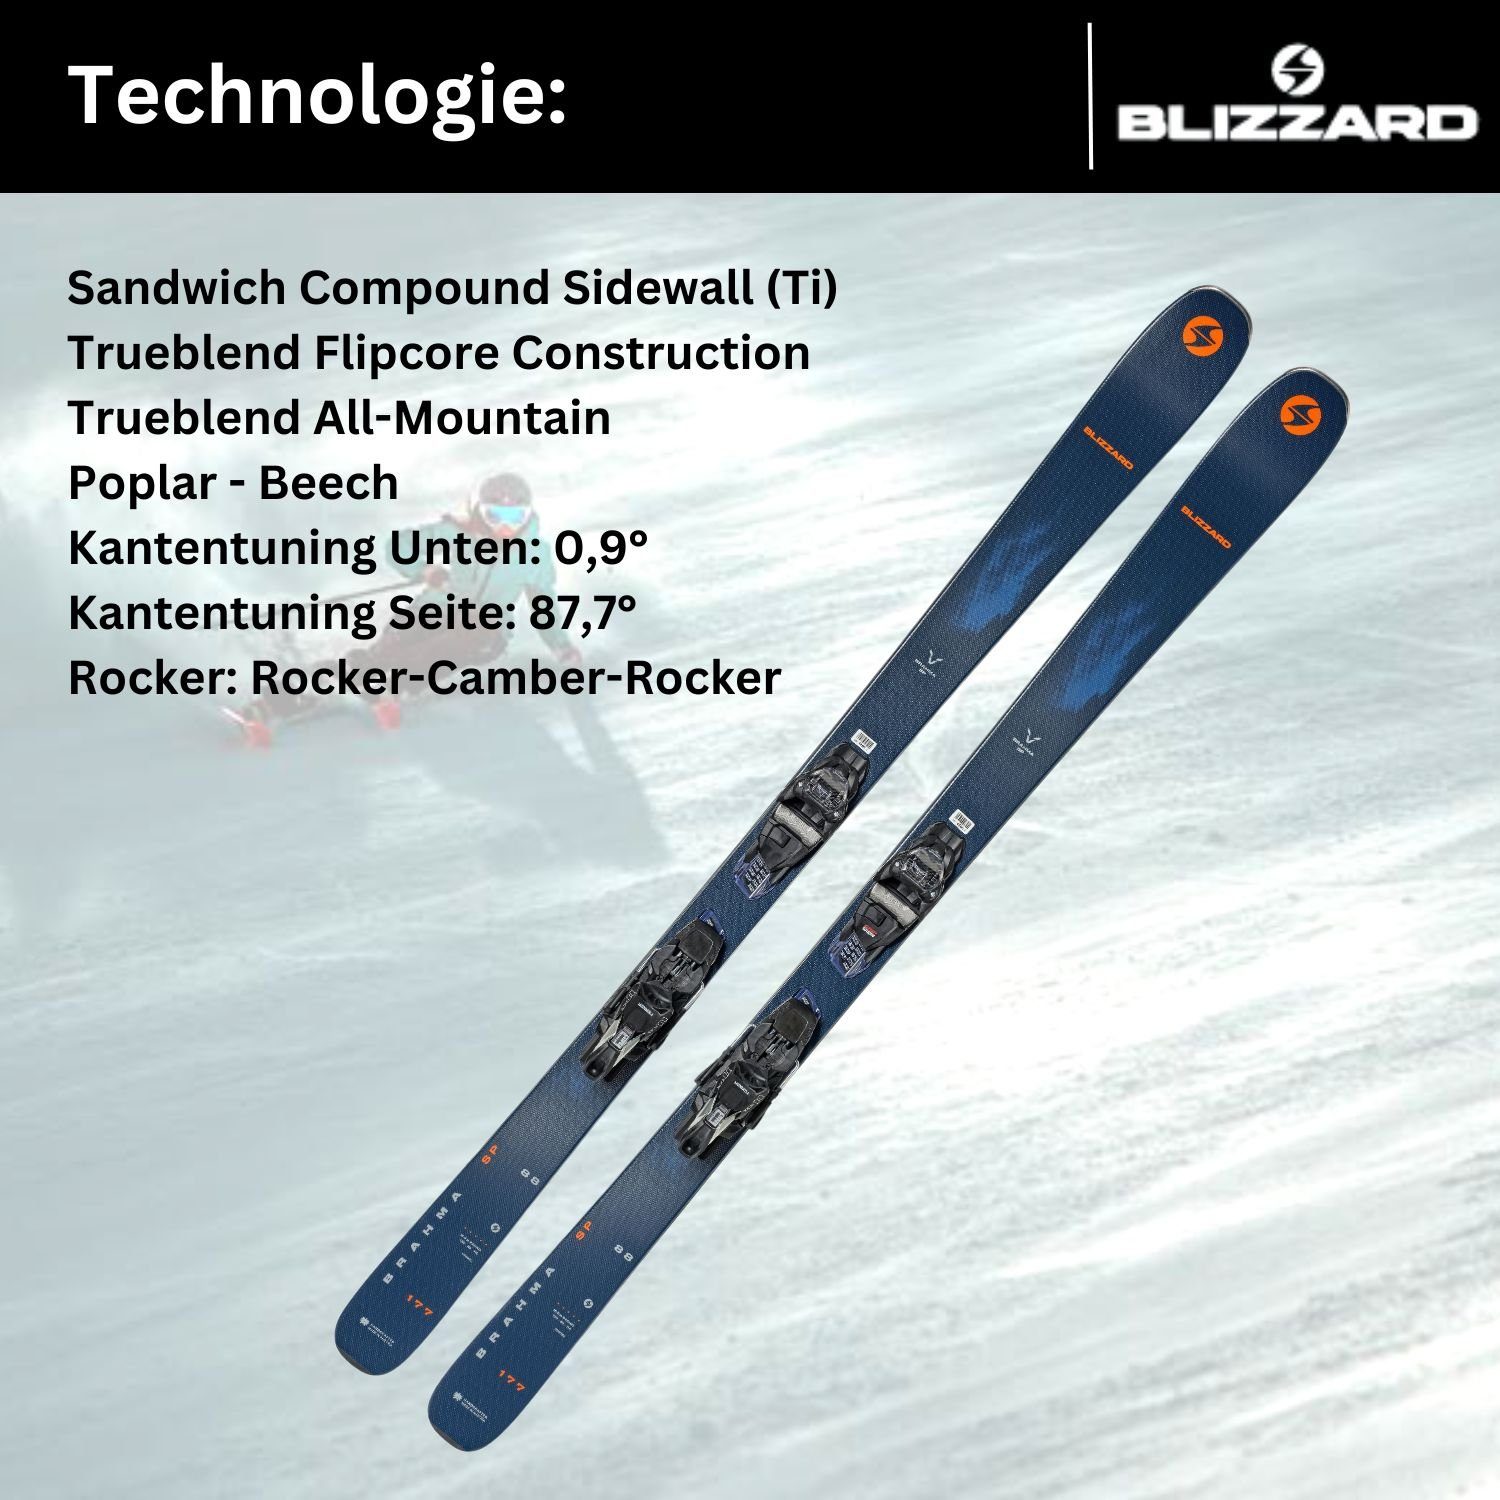 BLIZZARD Ski, Ski + Blizzard Bindung 88 11 Marker Camber Z3-11 Brahma TCX Rocker